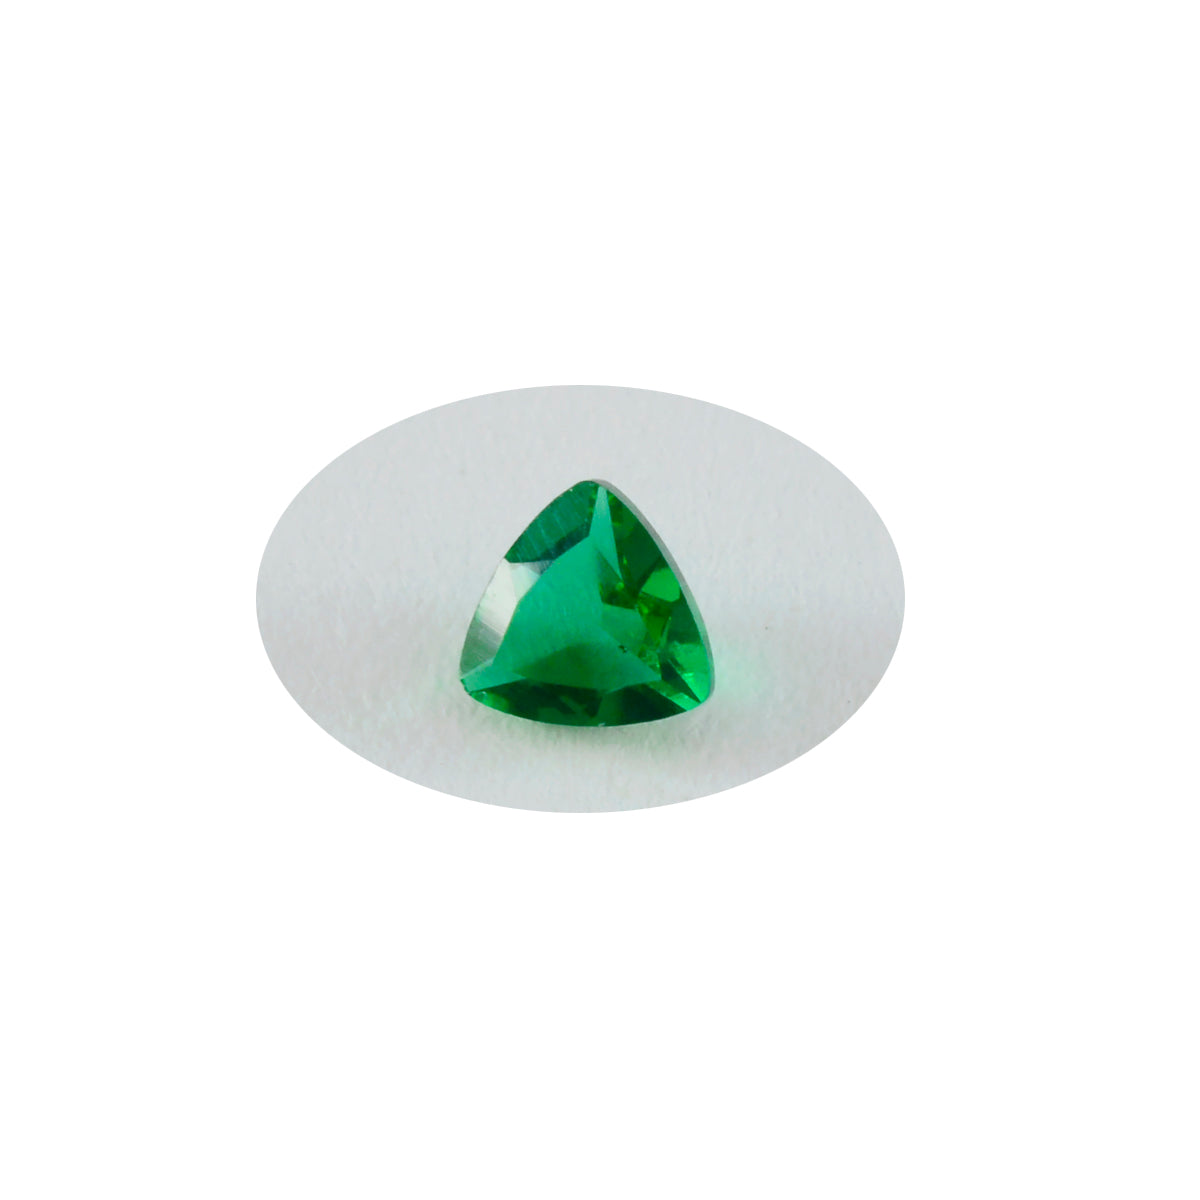 riyogems 1 st grön smaragd cz fasetterad 11x11 mm biljoner form en kvalitetspärla